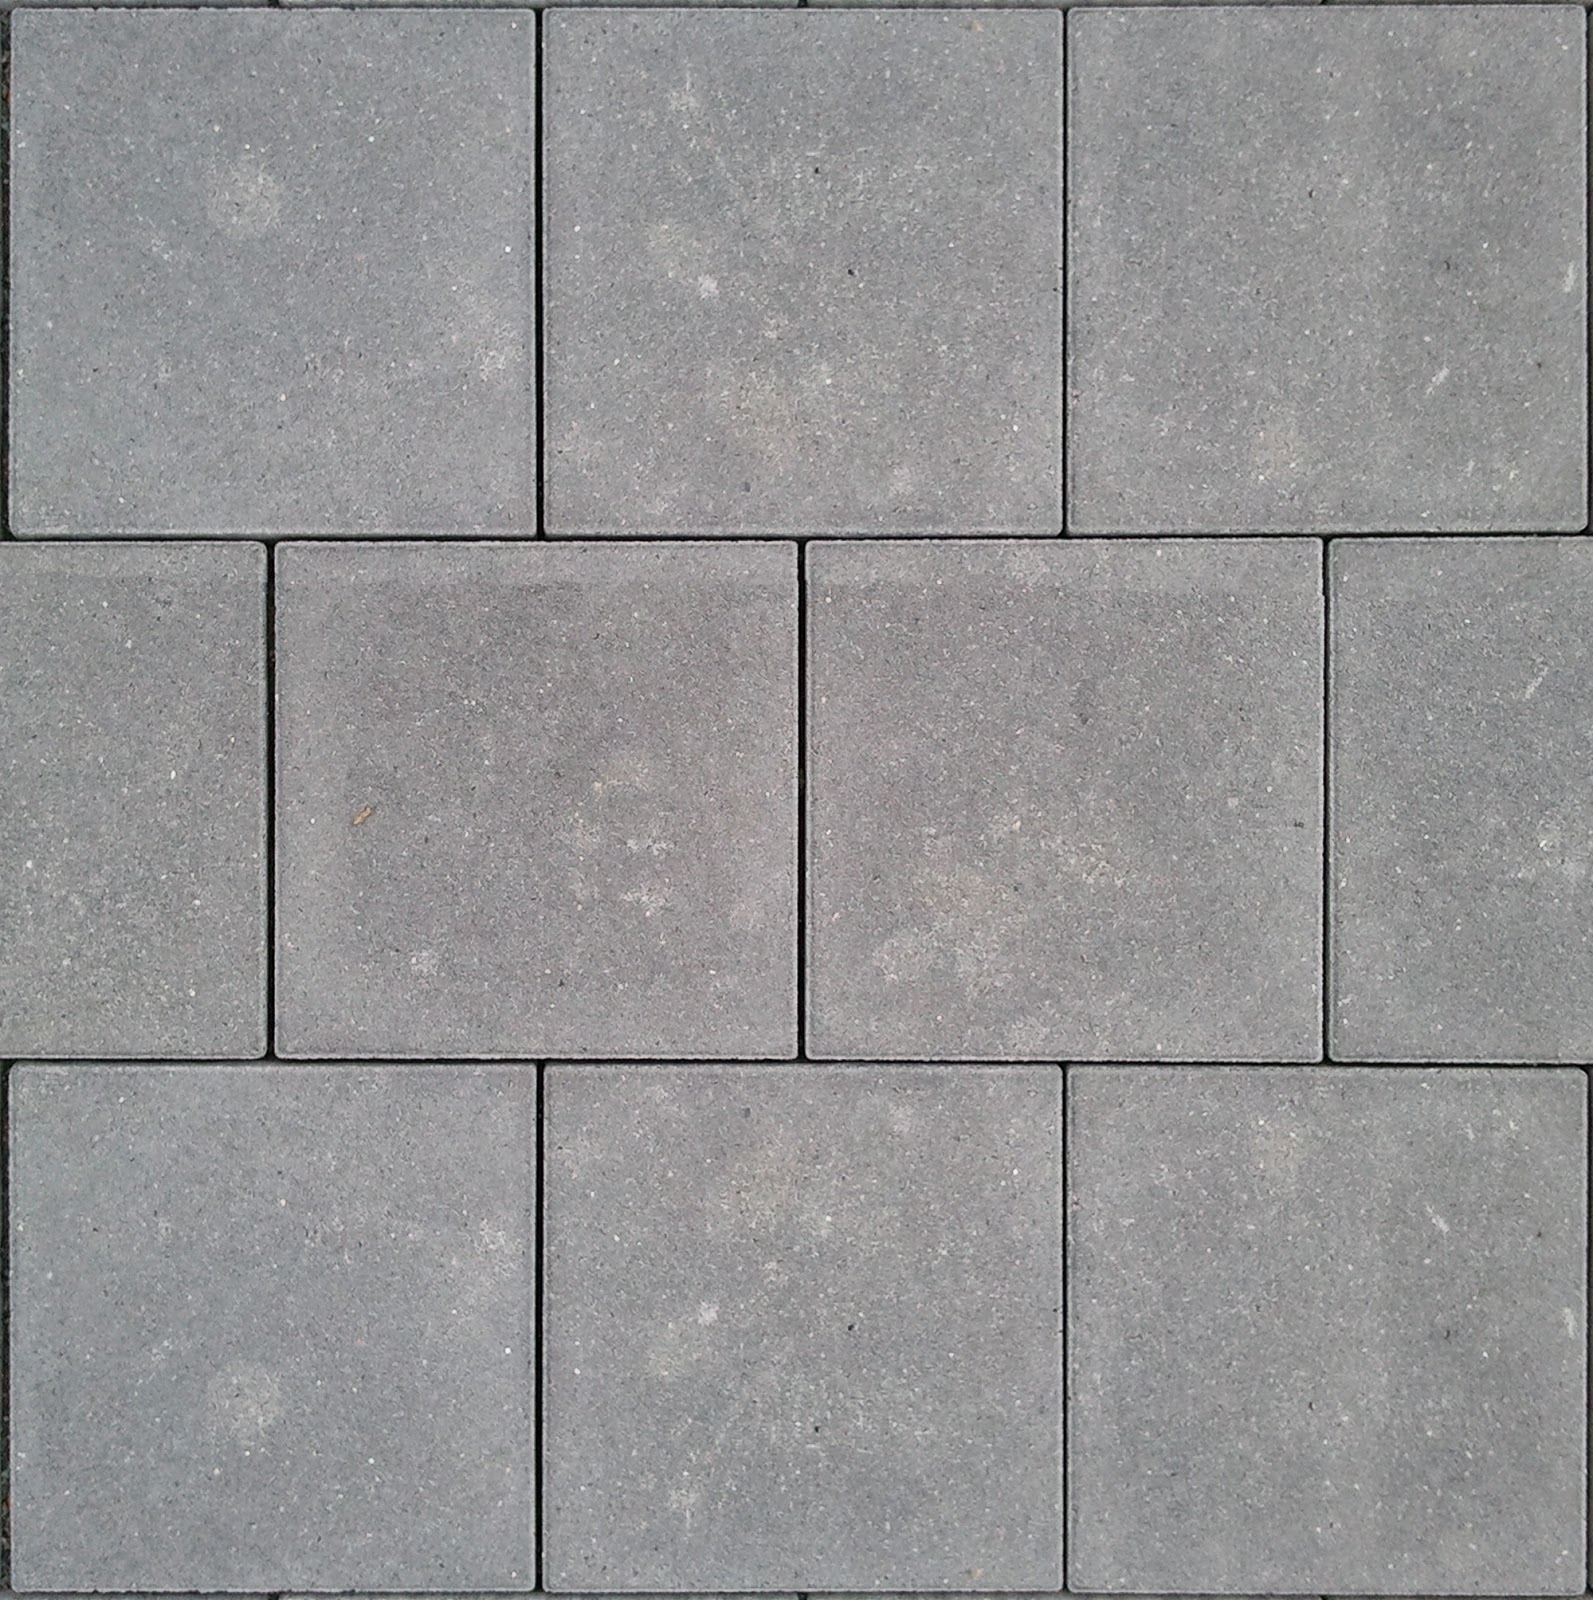 Texture+of+Gray+Seamless+Concrete+Pavement.jpg 1,593×1,600 pixels ...